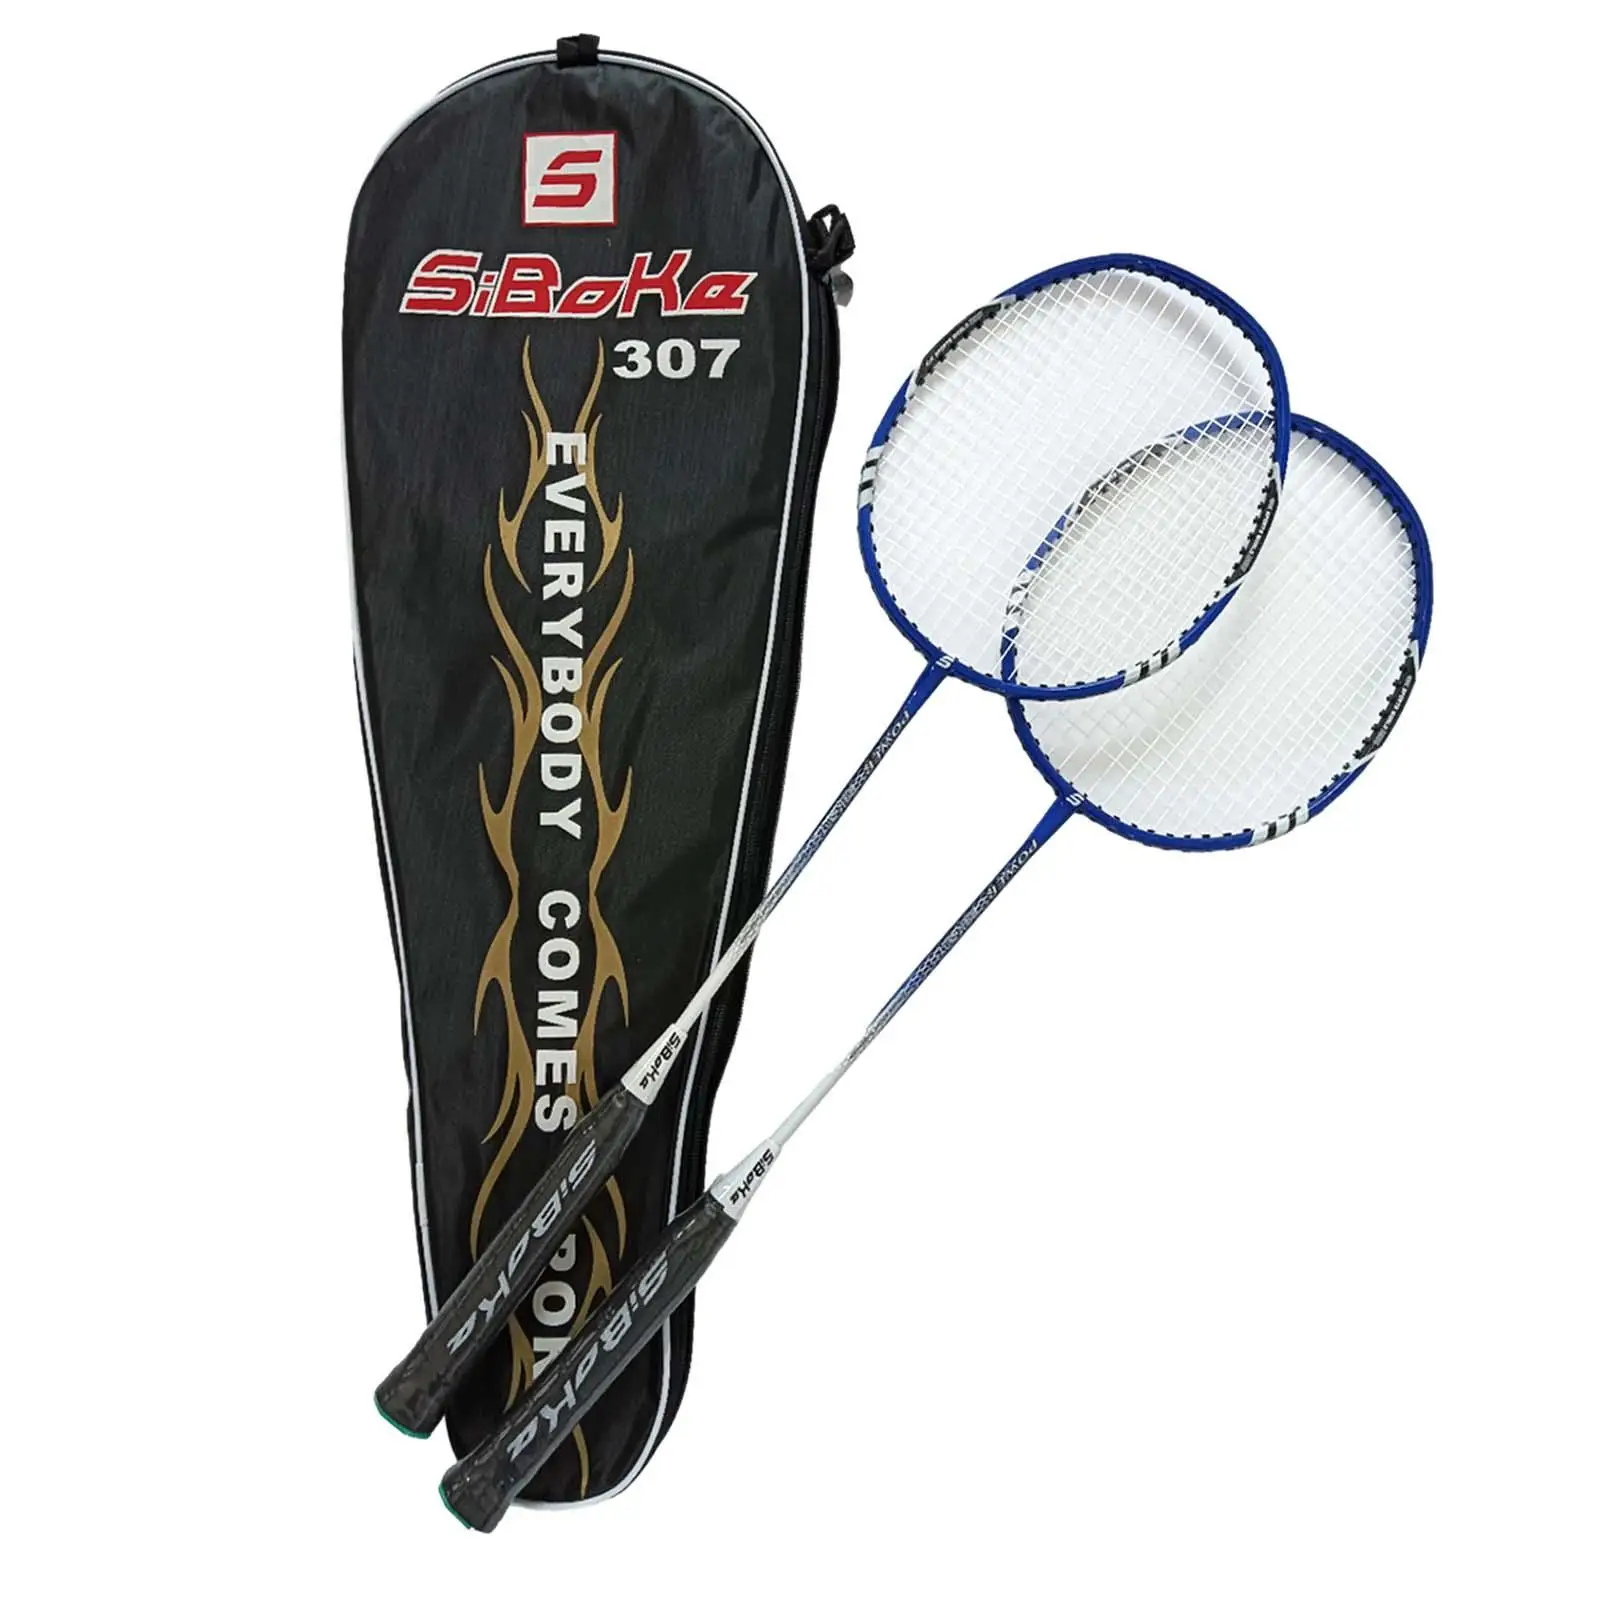 2Pcs Badminton Racquet Set Professional Badminton Rackets Interactive Toys and